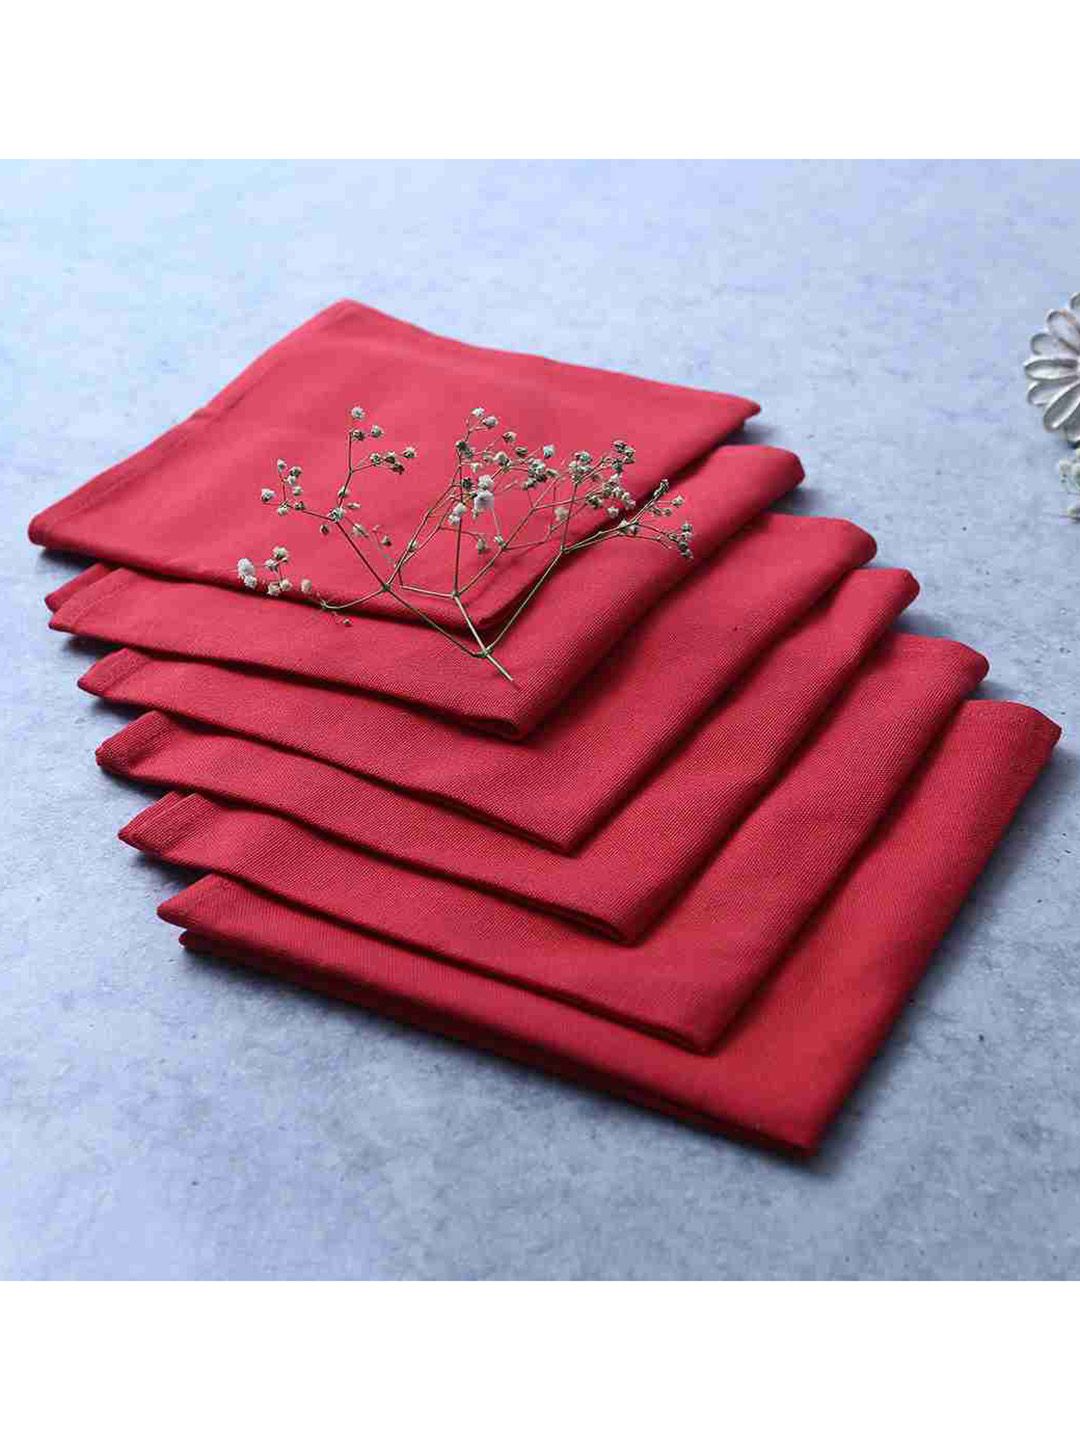 Wonderchef Como Set of 6 Red Cotton Table Napkins Price in India